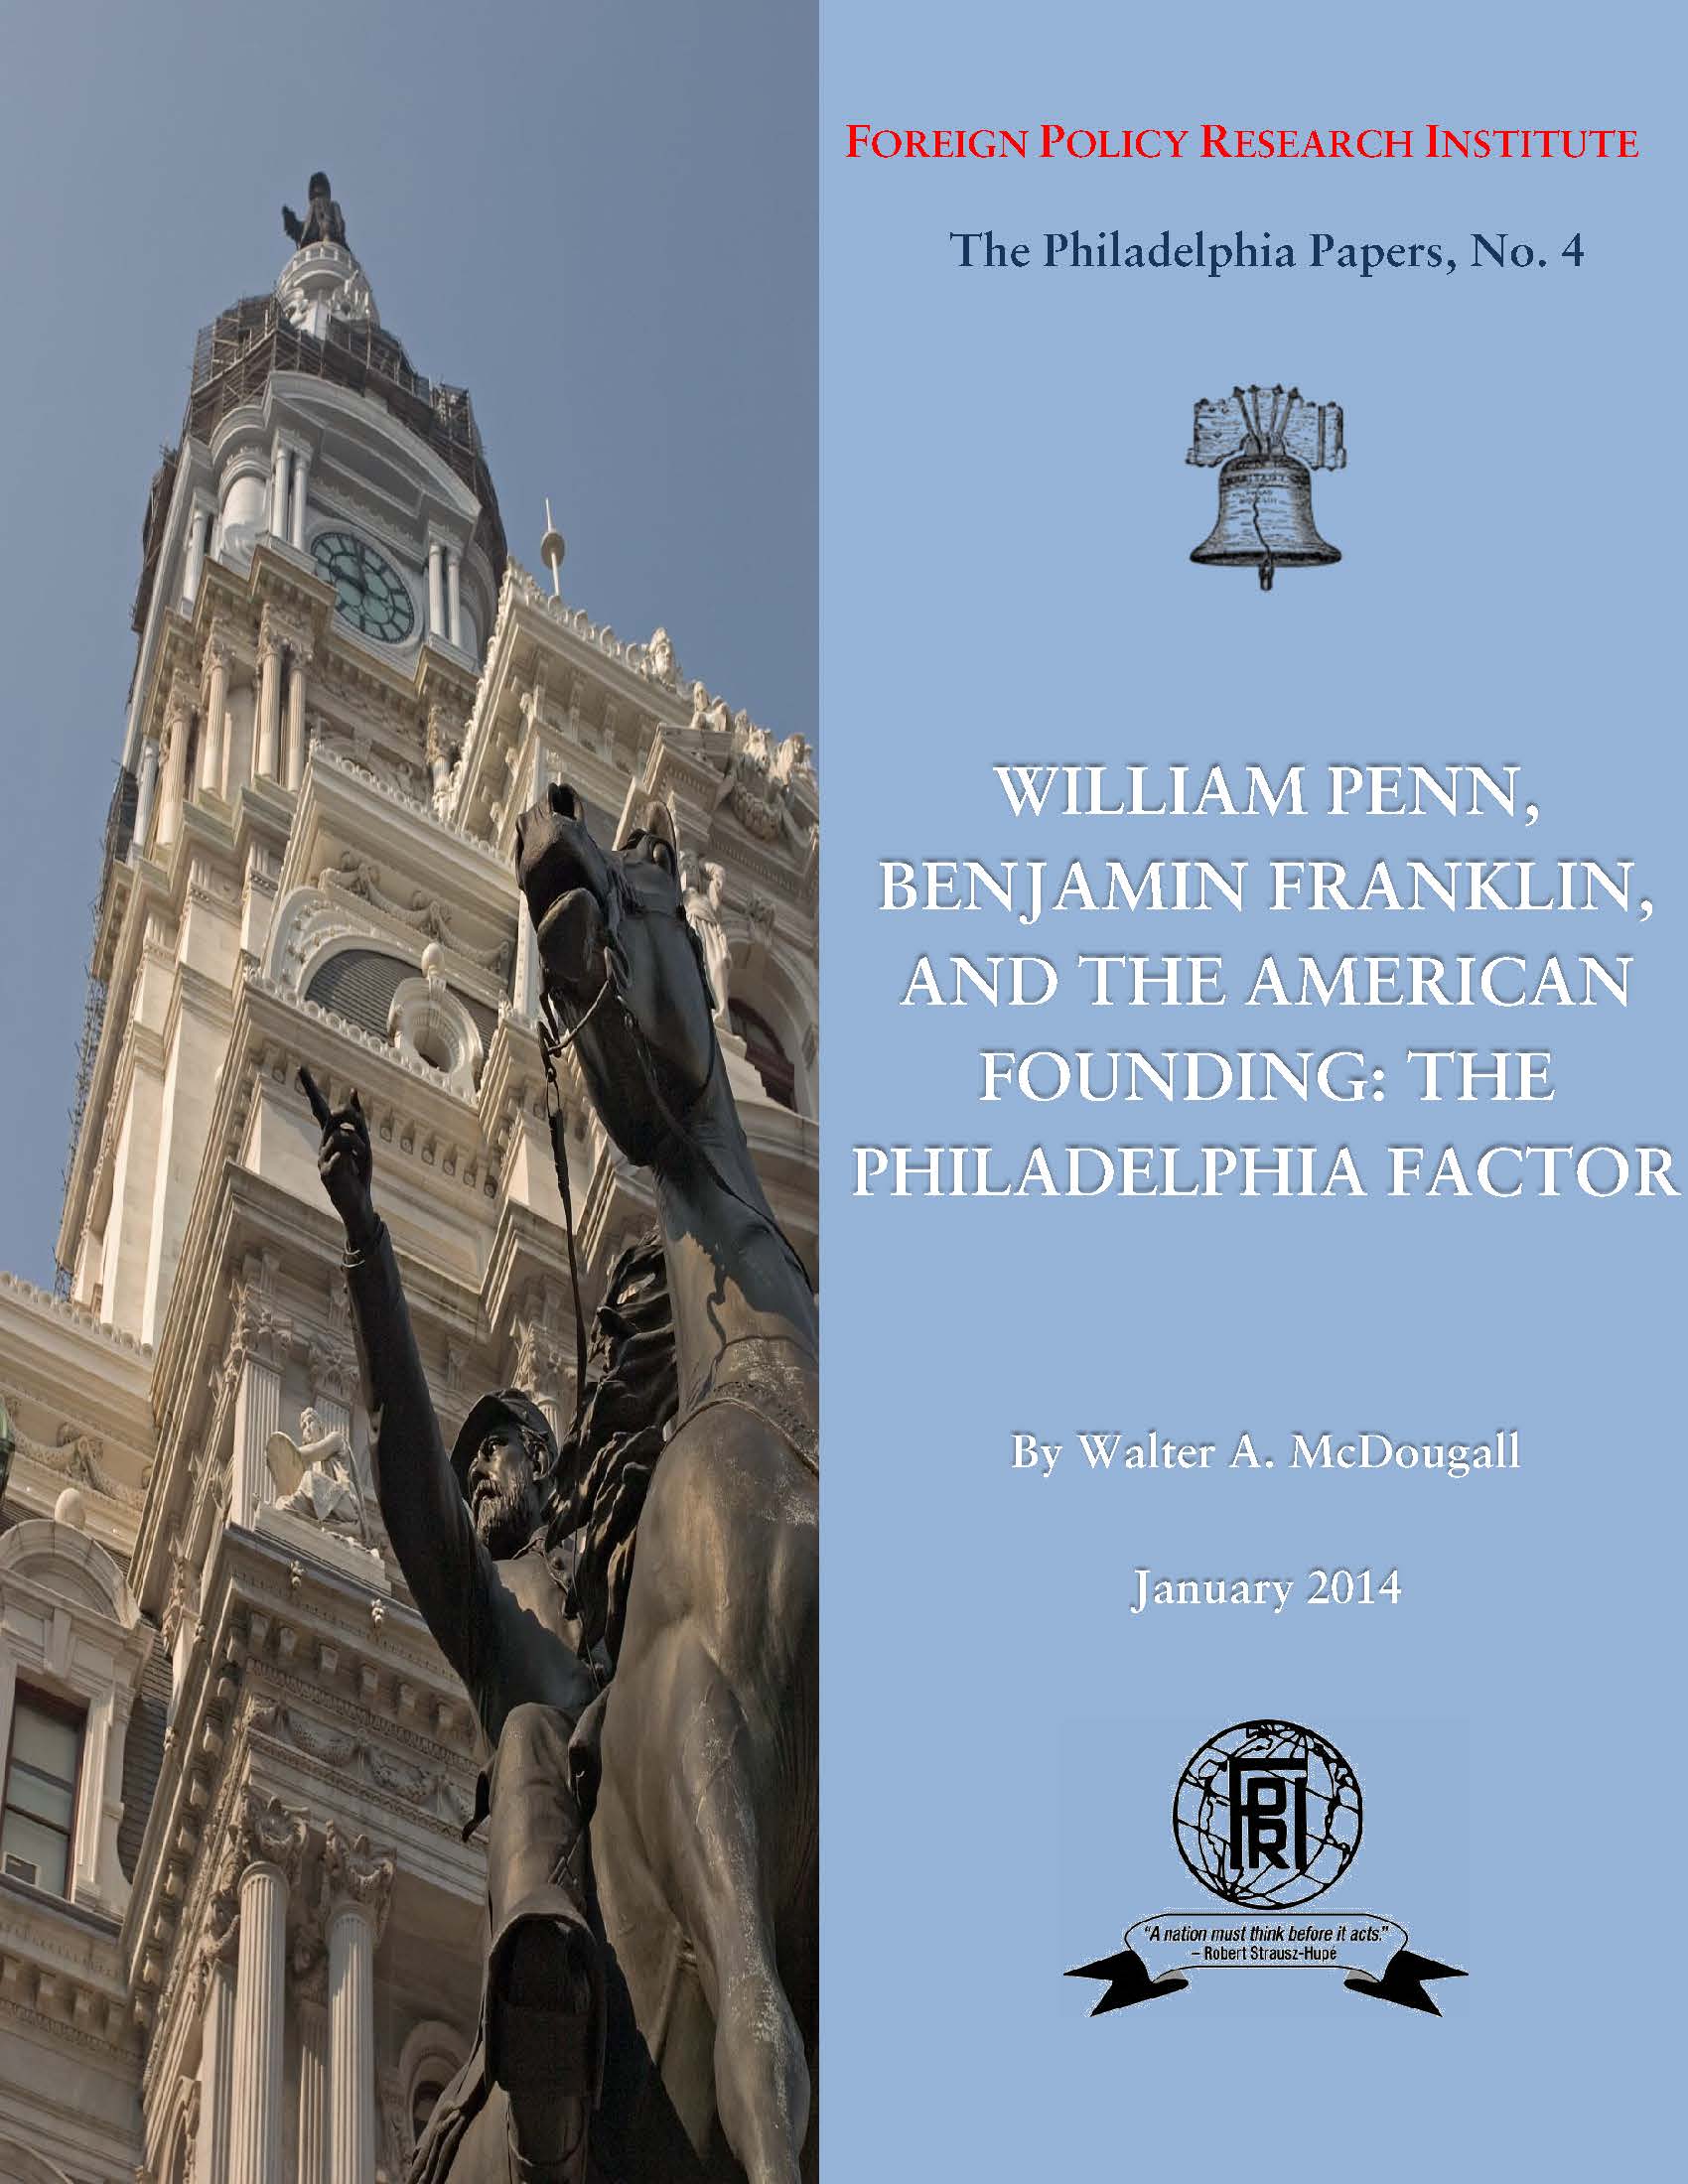 William Penn, Benjamin Franklin, and the American Founding: The Philadelphia Factor